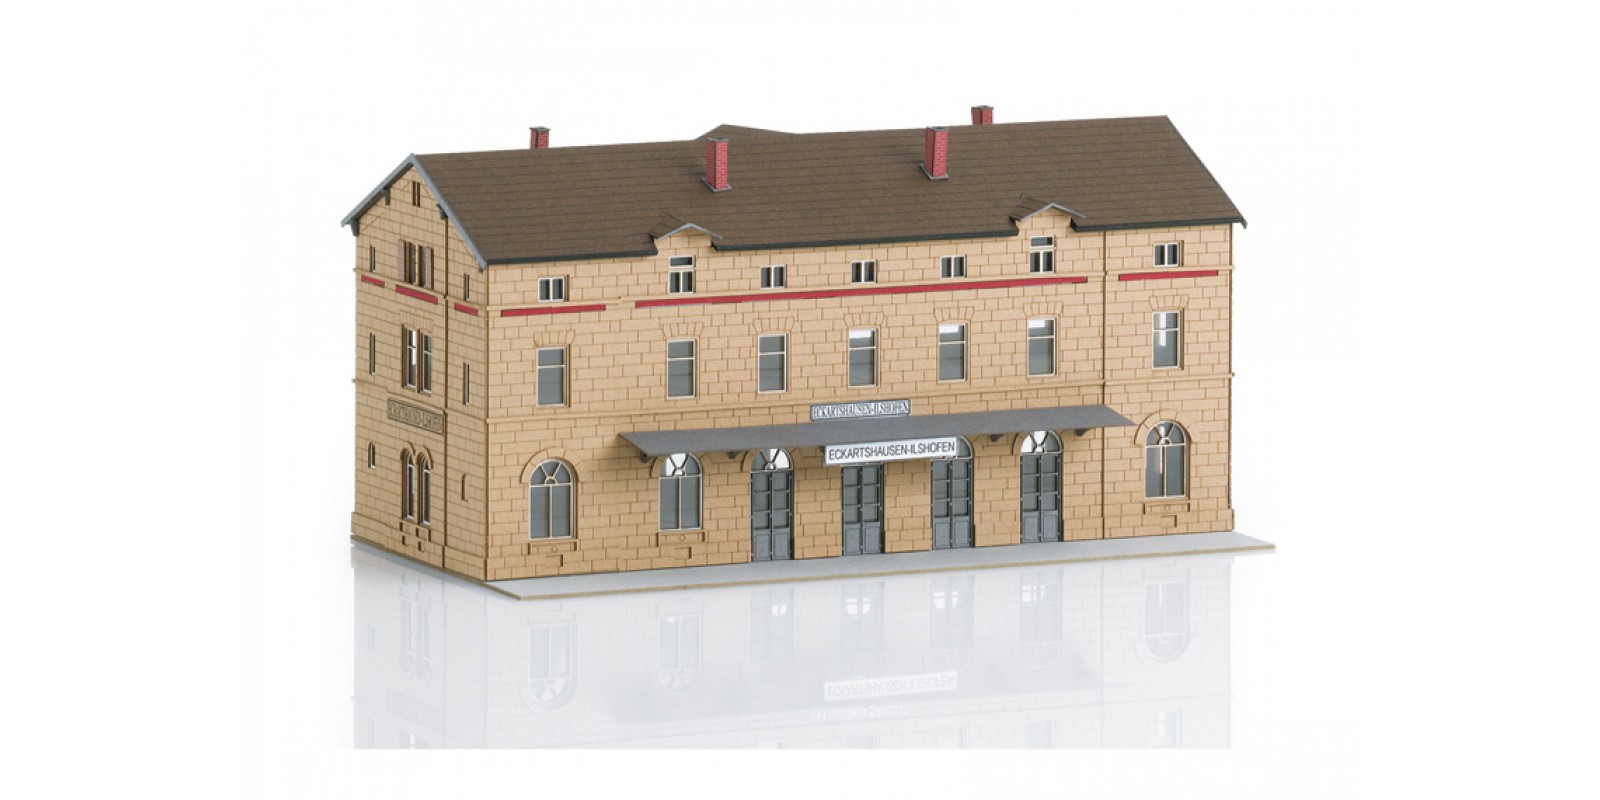  89703 Building Kit of the "Eckartshausen-Ilshofen" Station